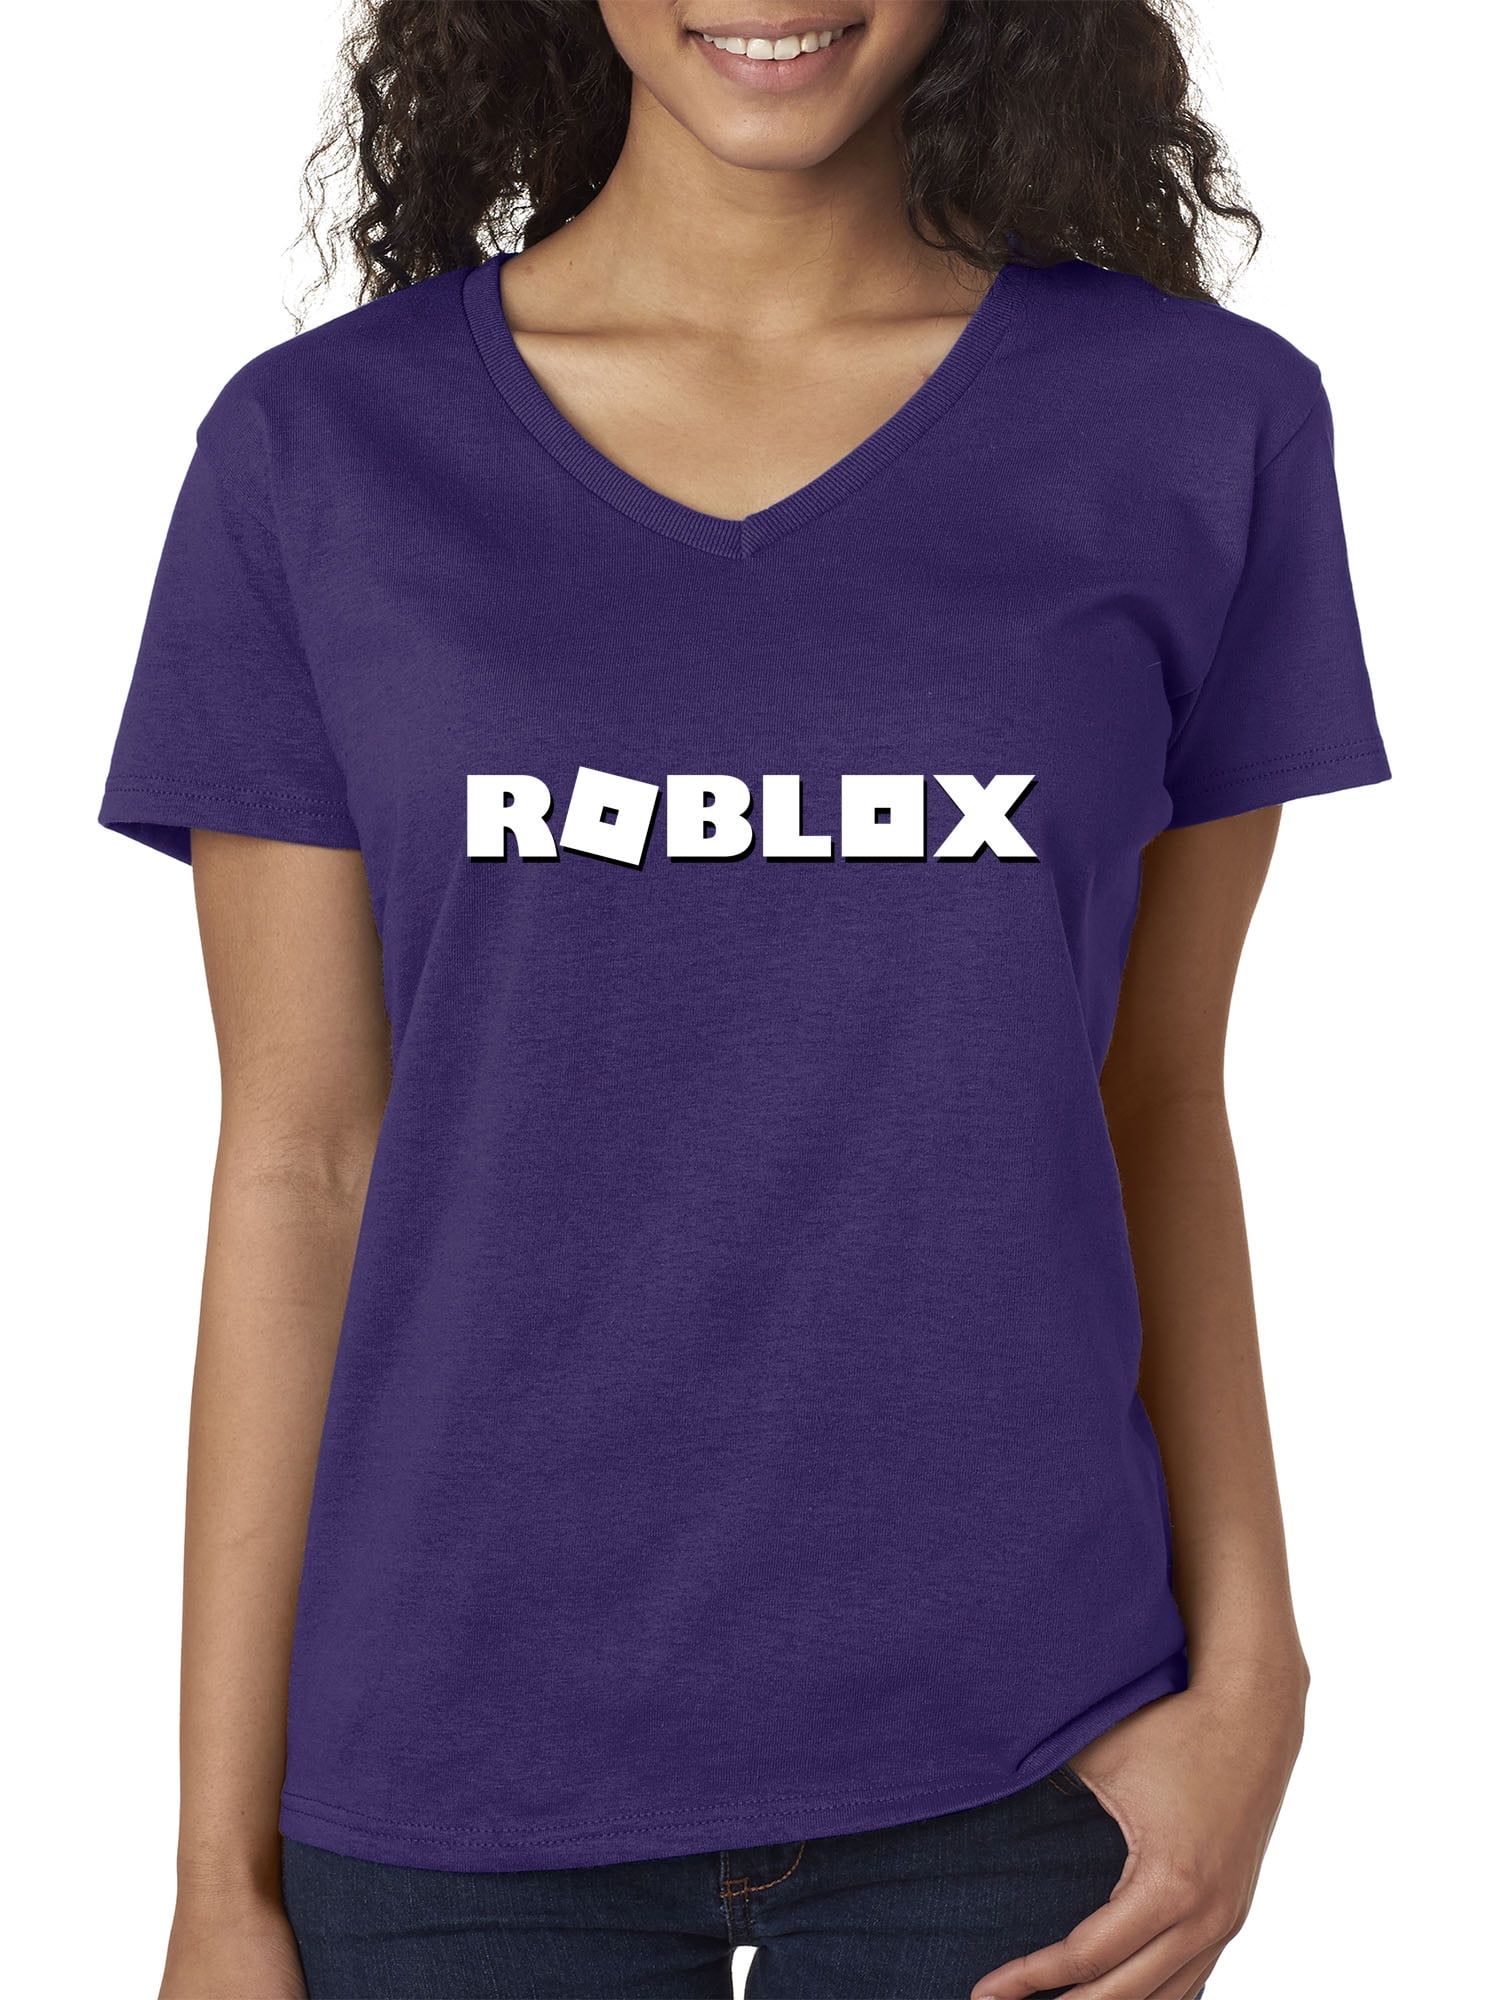 New Way New Way 923 Women S V Neck T Shirt Roblox Logo Game Accent Xl Purple Walmart Com Walmart Com - roblox serpent jacket roblox diamonds generator